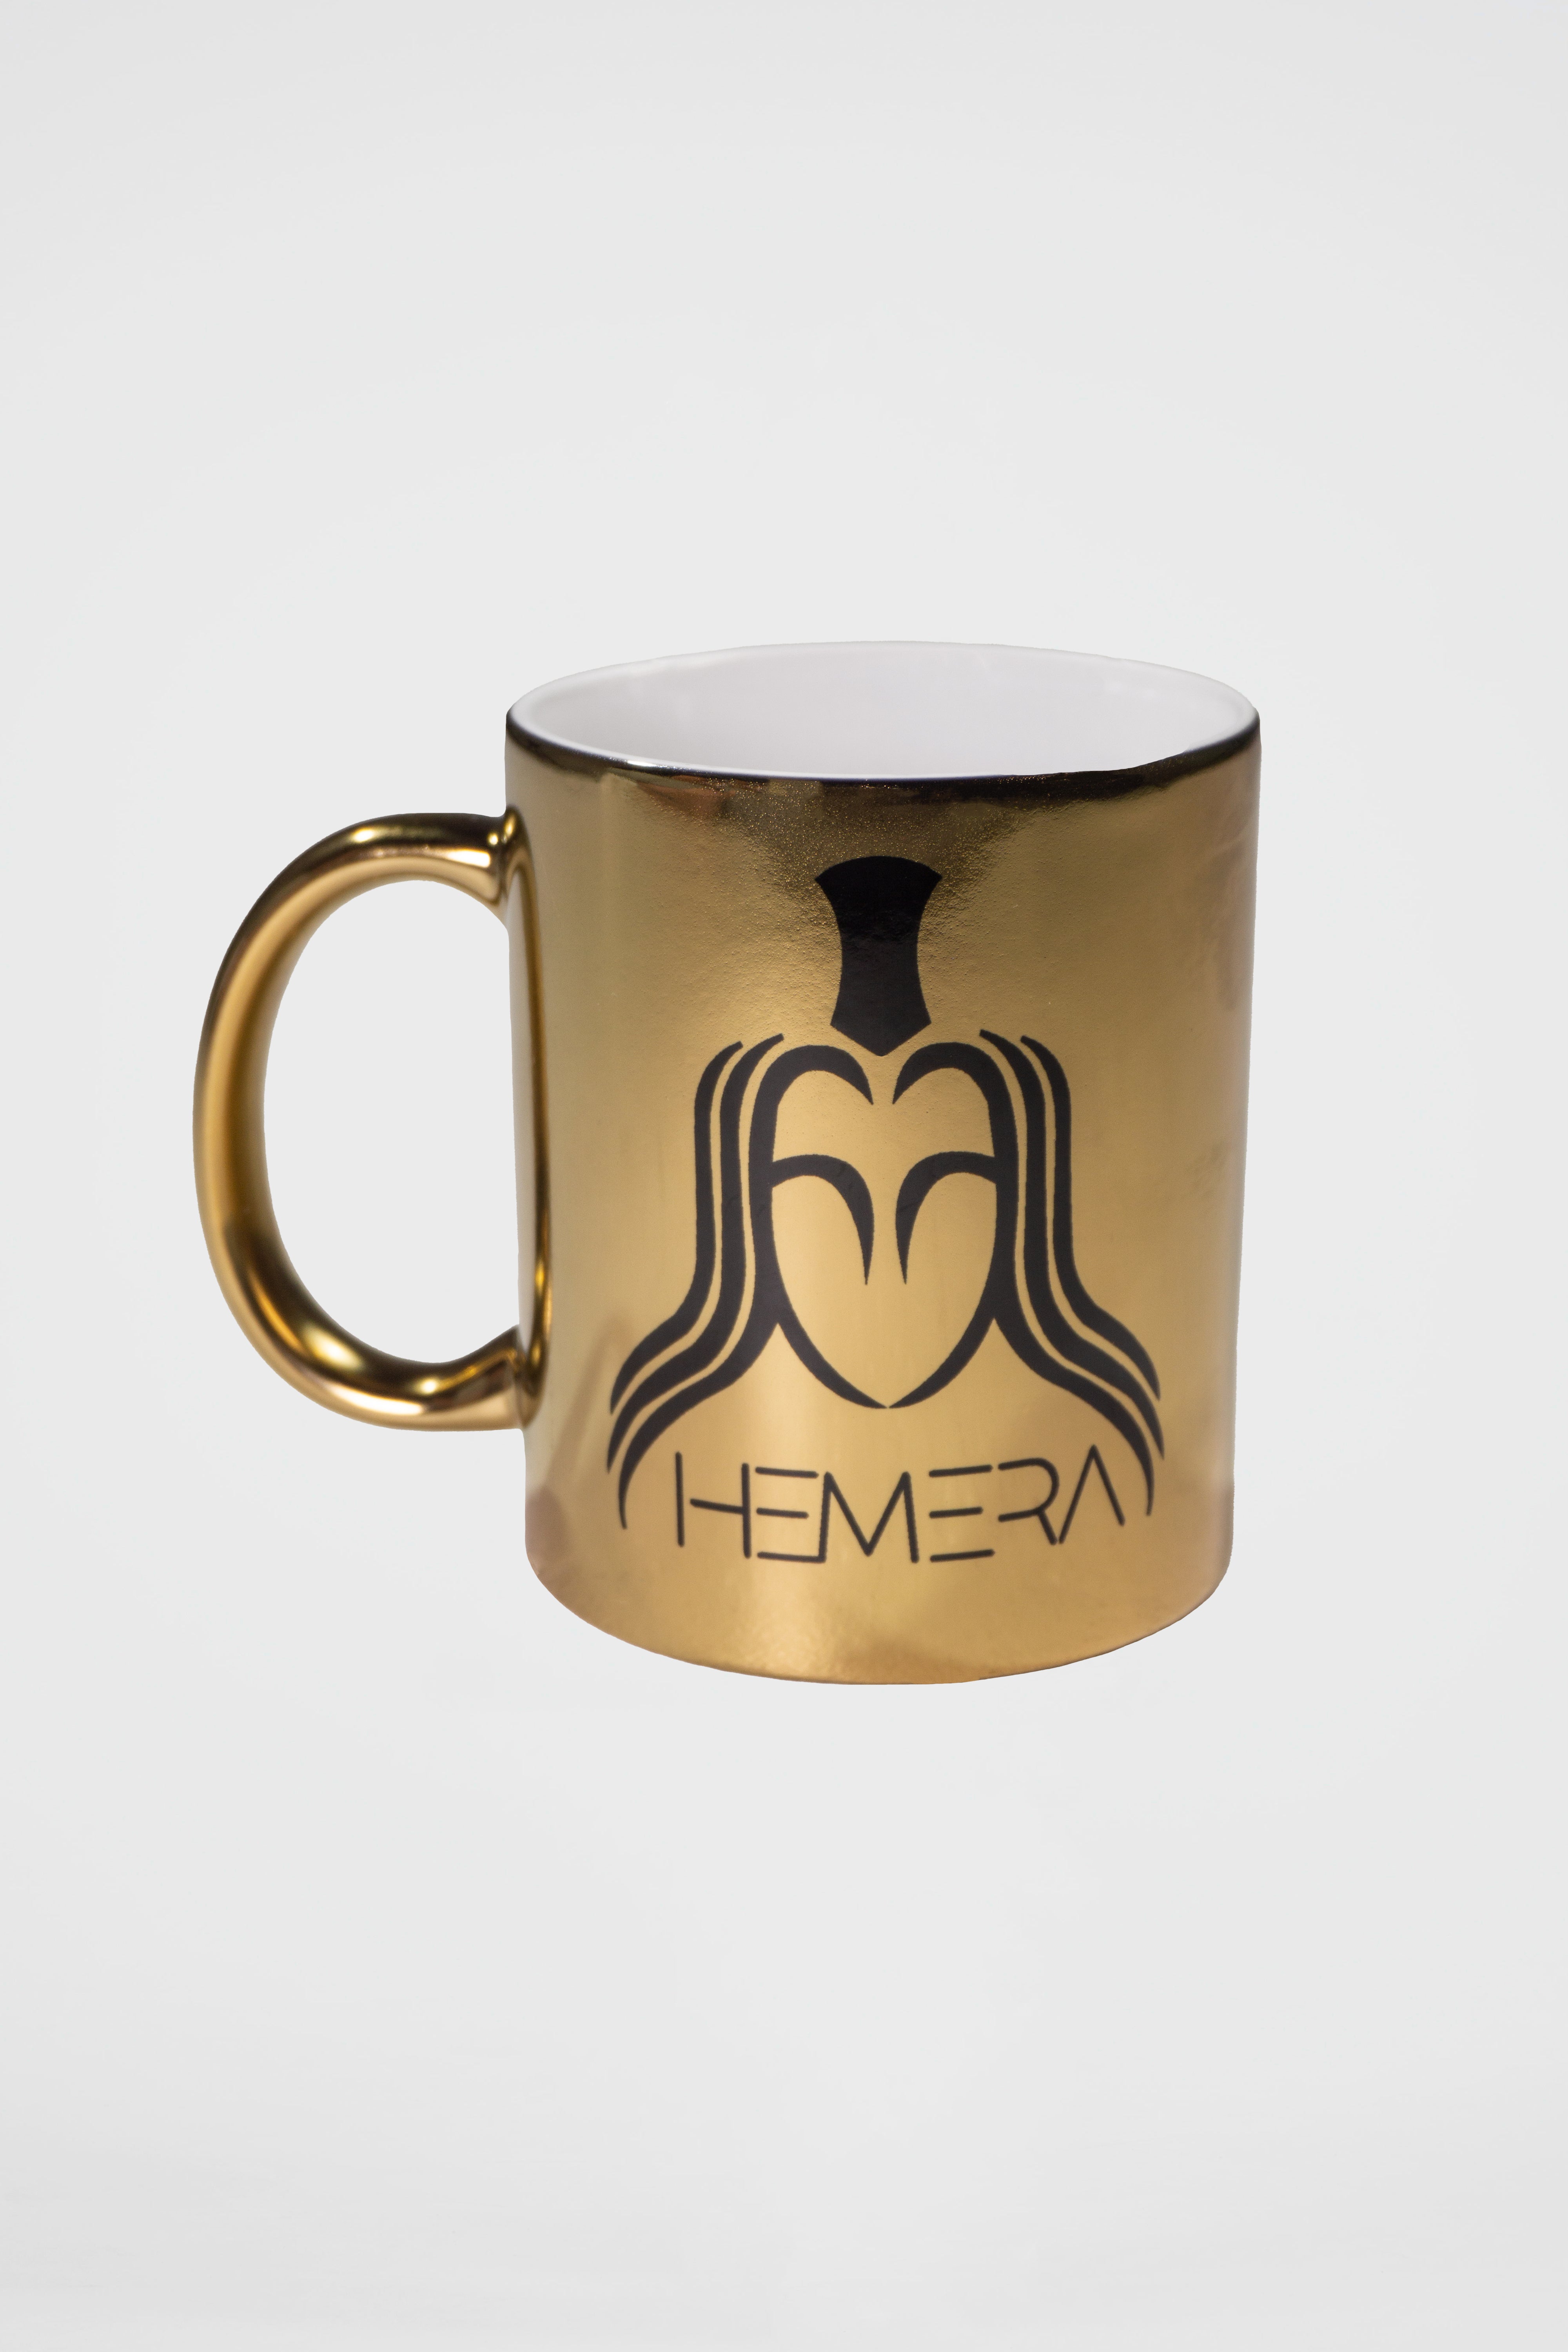 Hemera Gold Mug